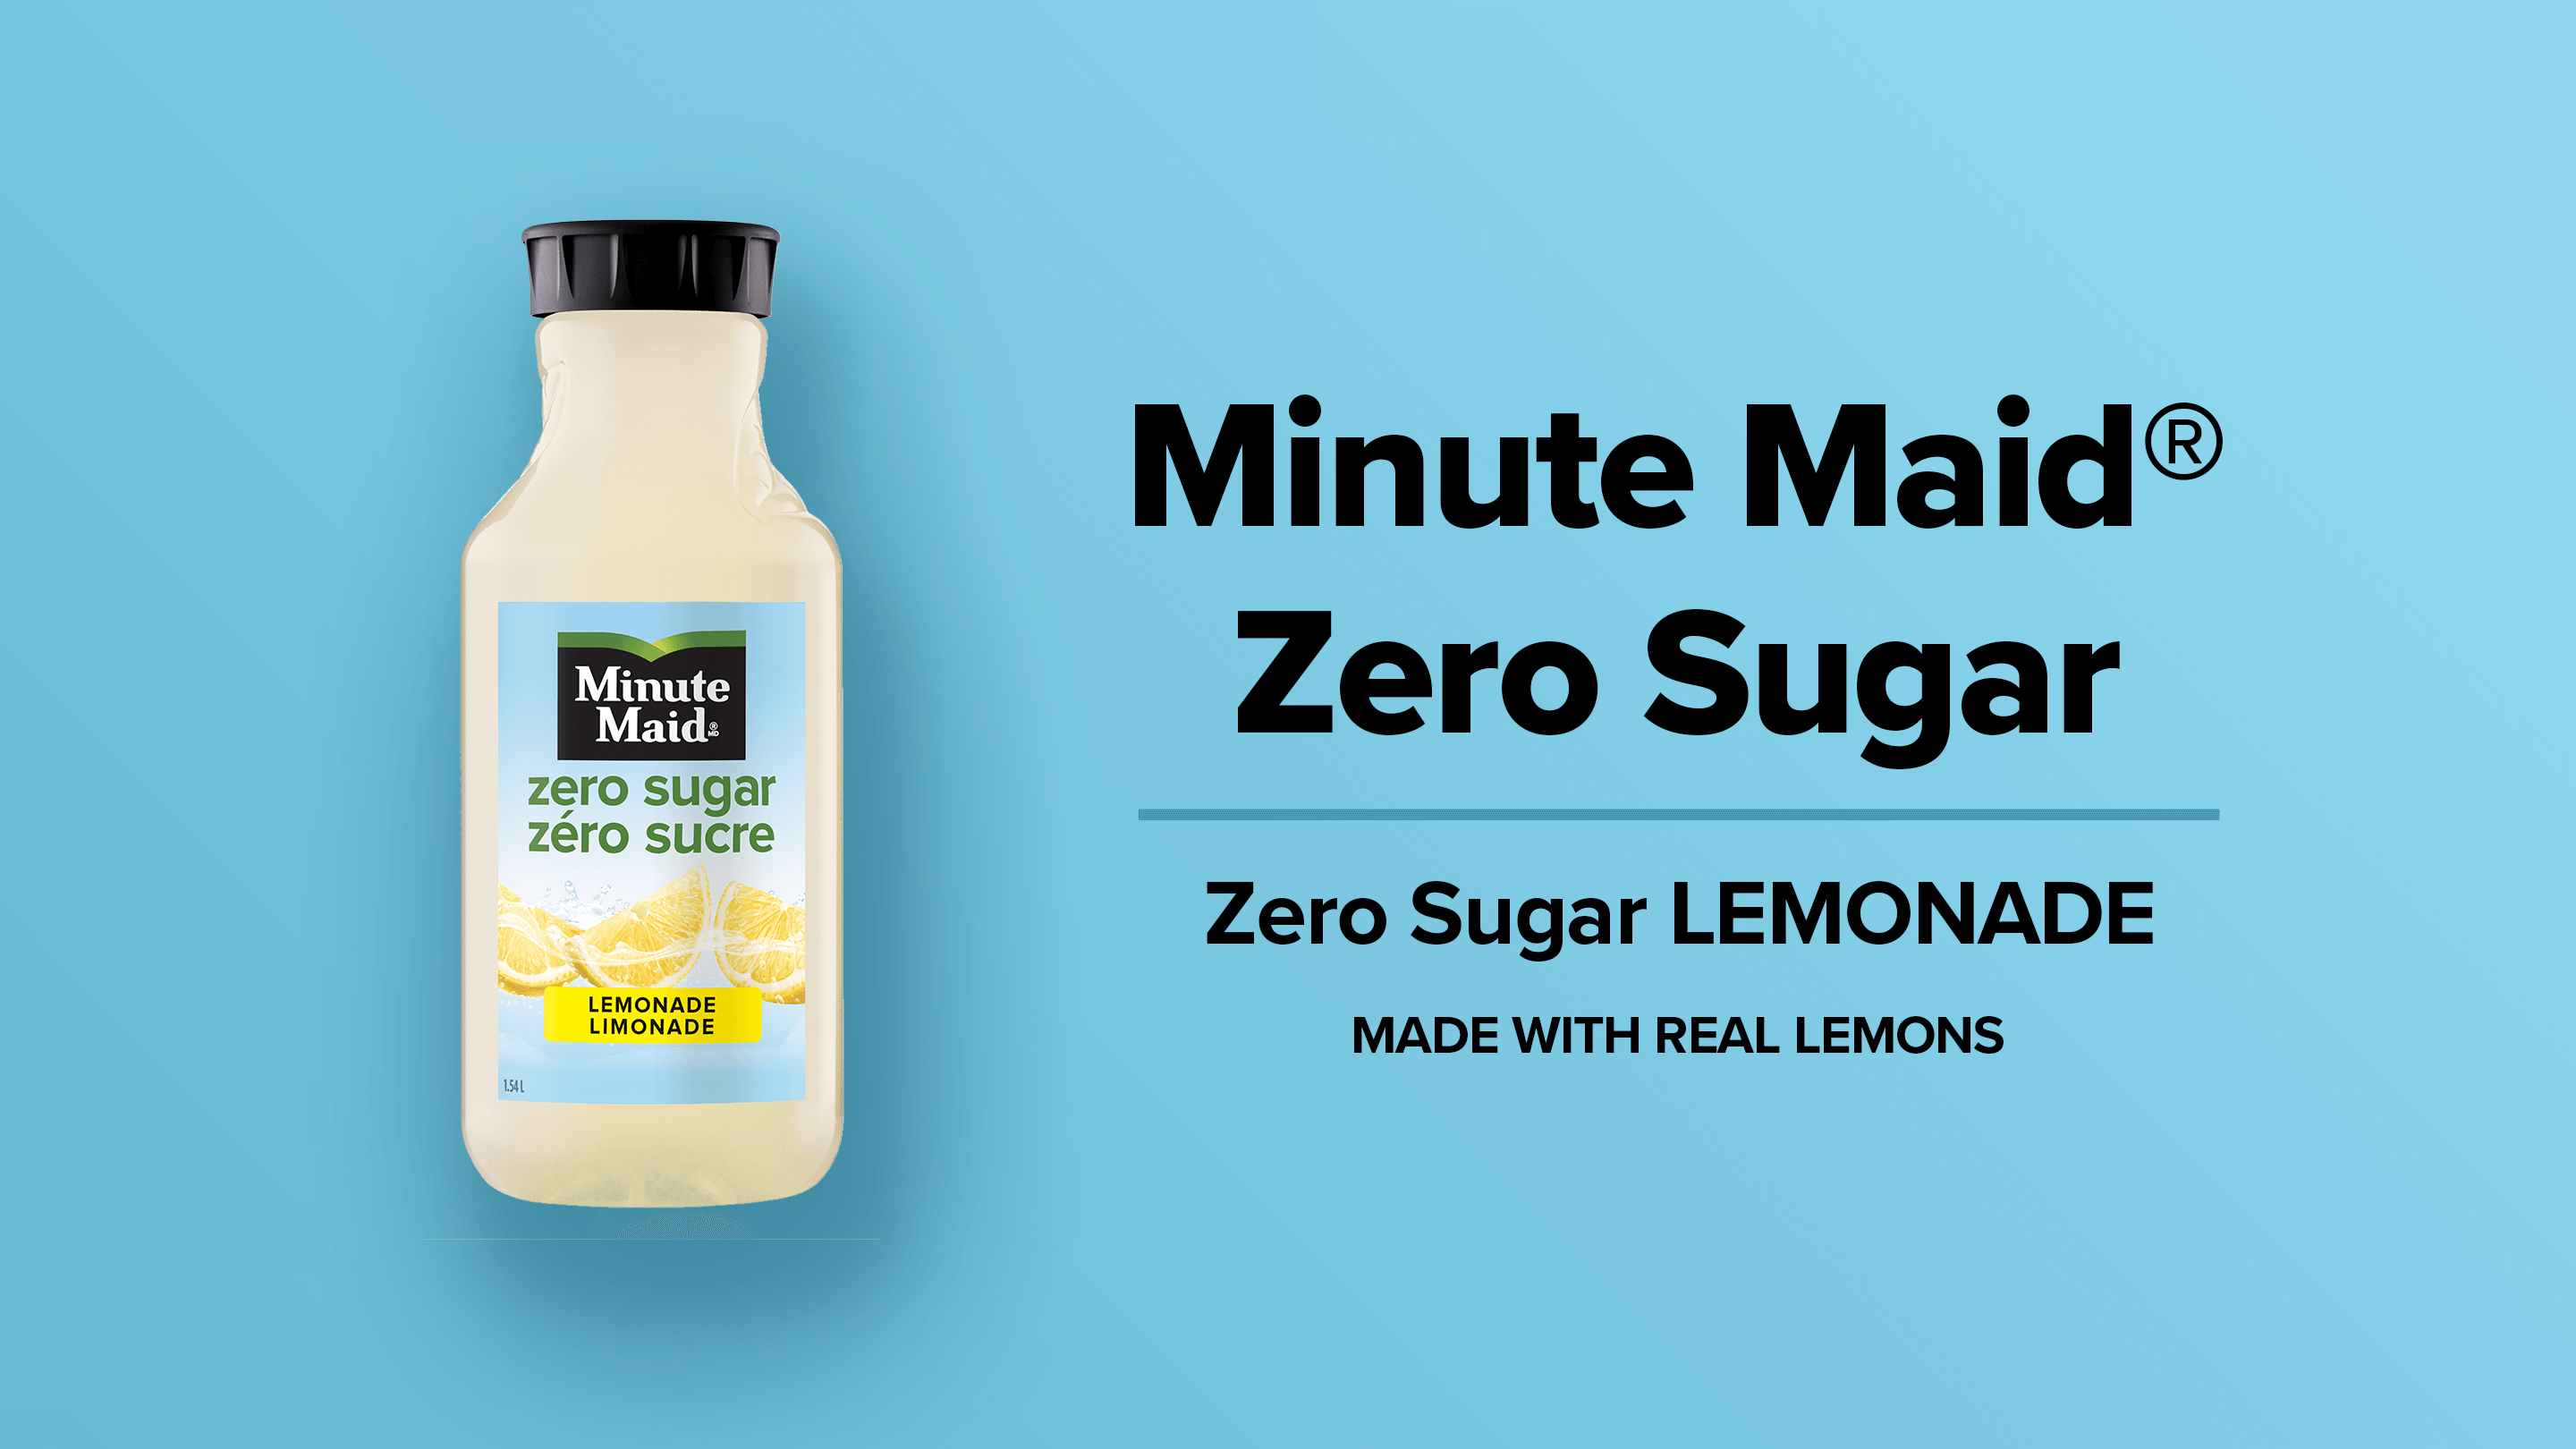 Minute Maid Zero Sugar. Zero Sugar Lemonade. Made with Real Lemons.